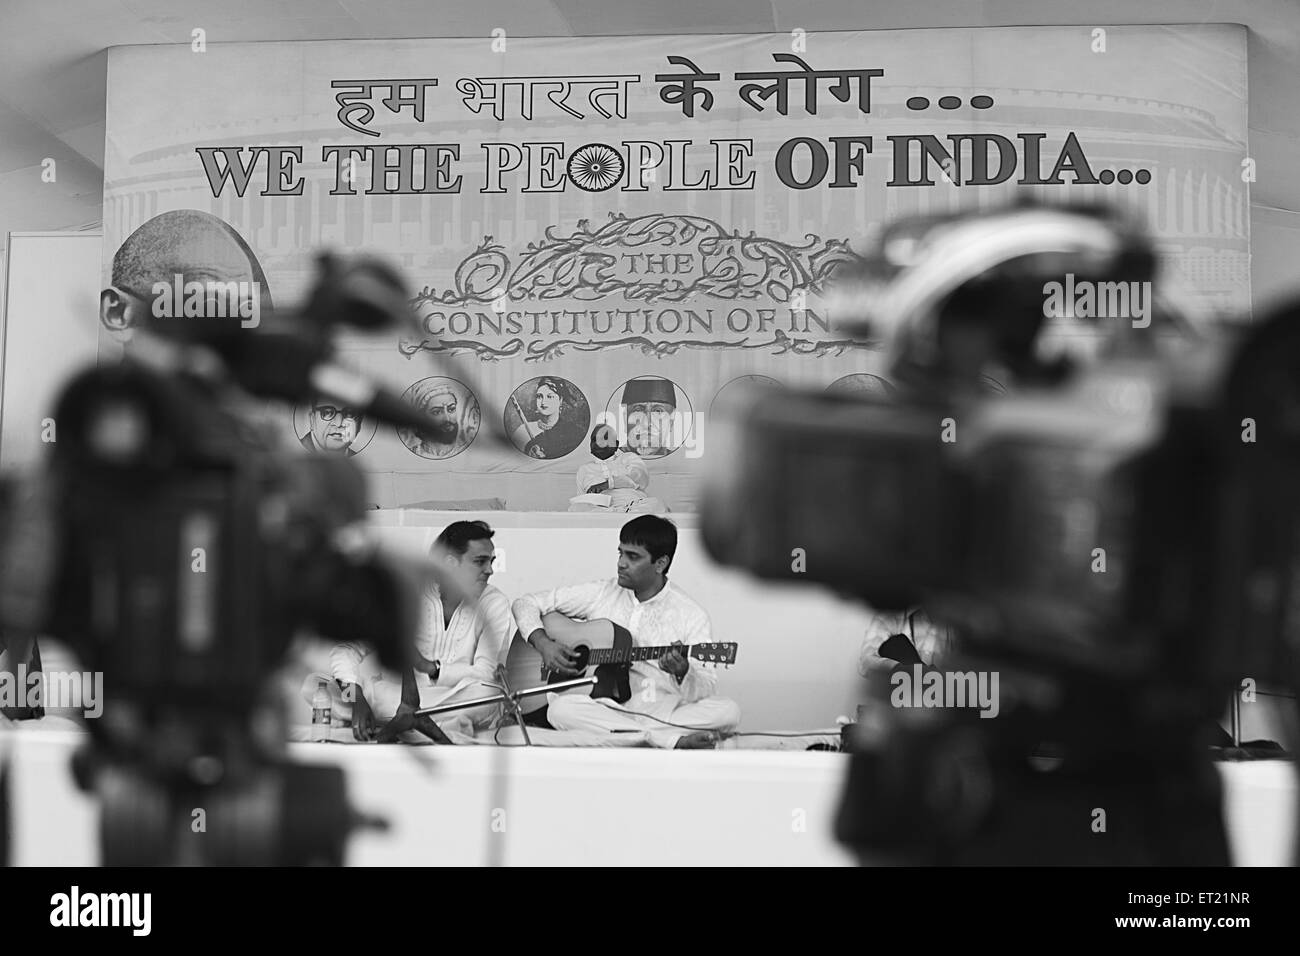 Video Camera Coverage Anna Hazare Fast against Corruption Mumbai Maharashtra India Asia Dec 2011 Stock Photo